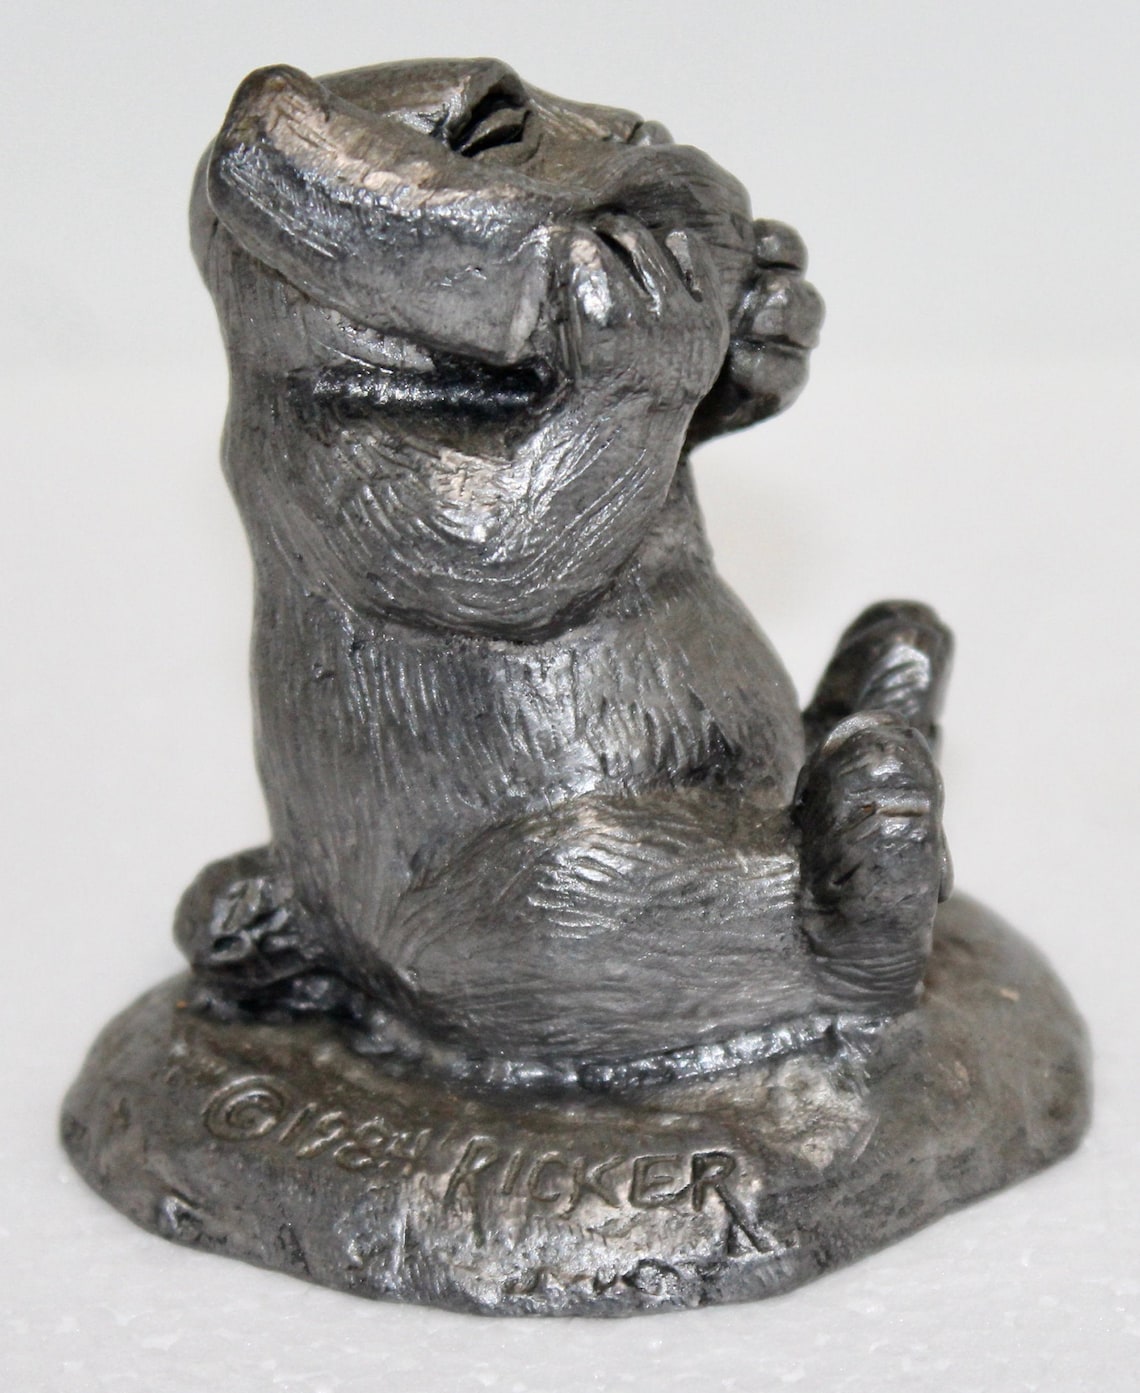 Vintage Michael Ricker sculptured Pewter Figurine | Etsy